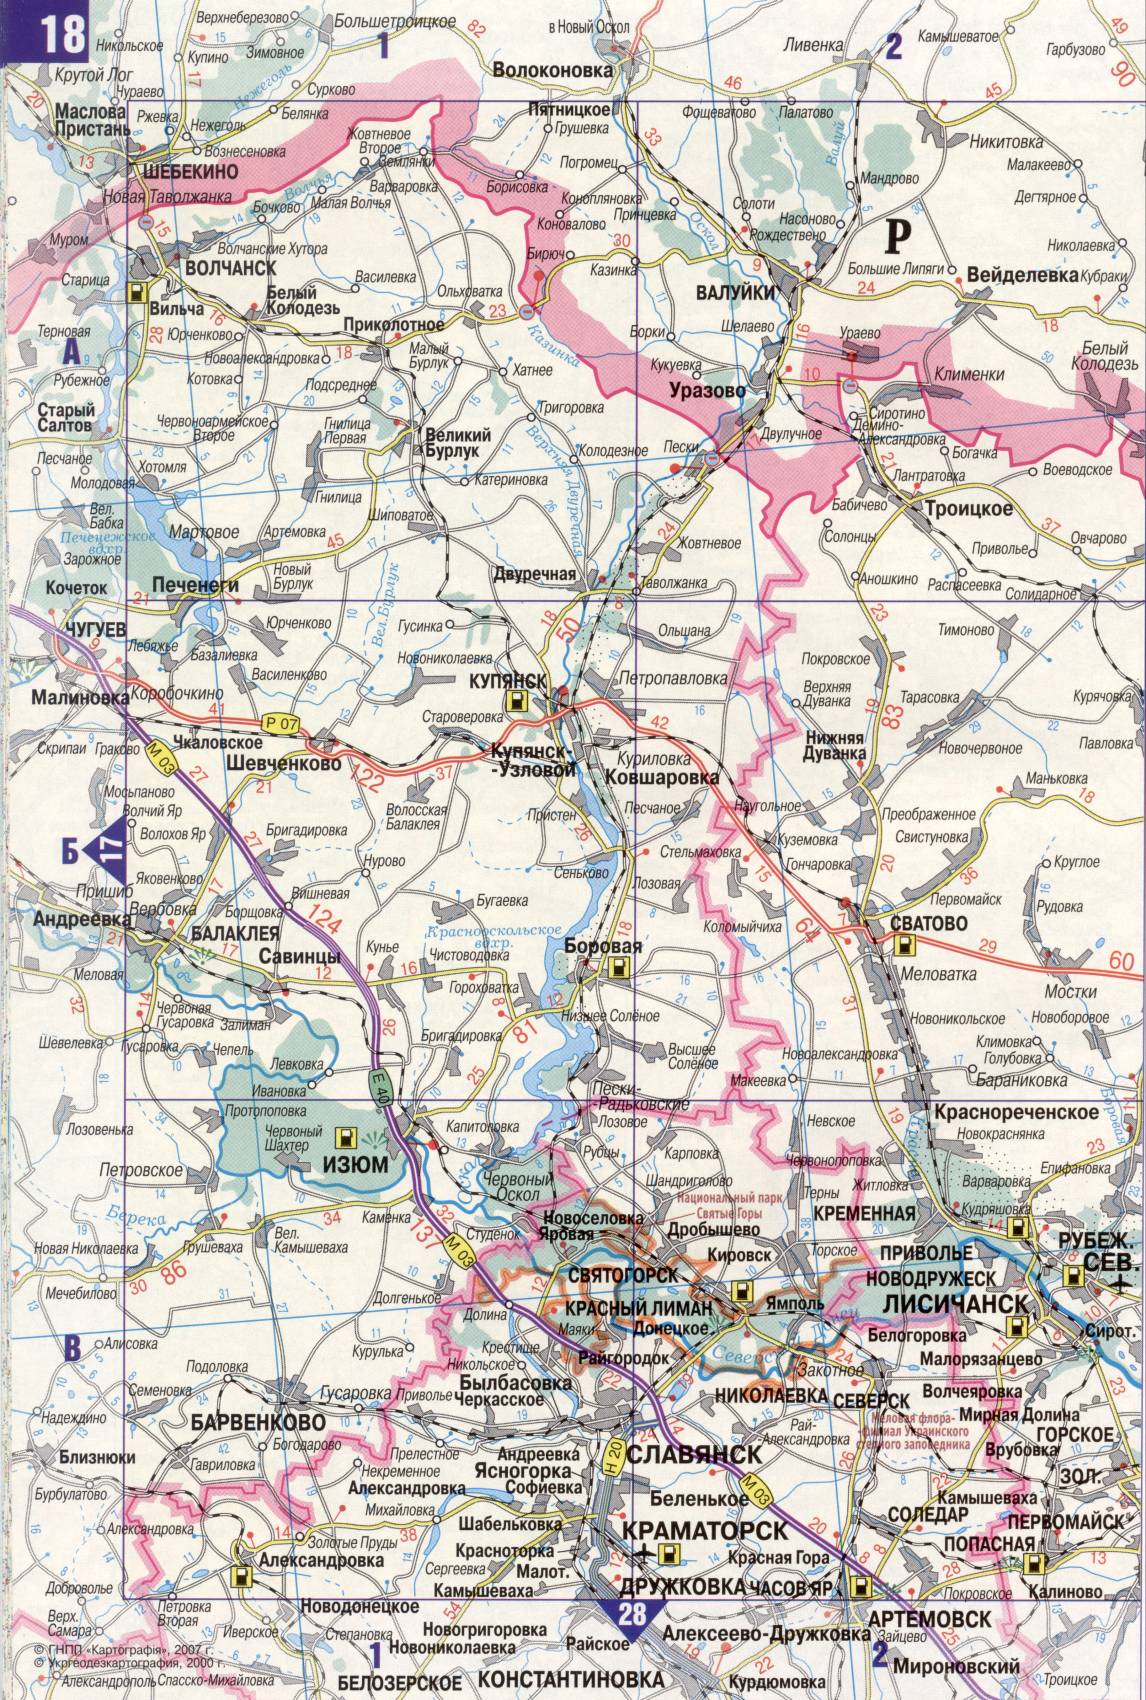 Map of Ukraine. Detailed road map of Ukraine avtomobilnog satin. download free, I1